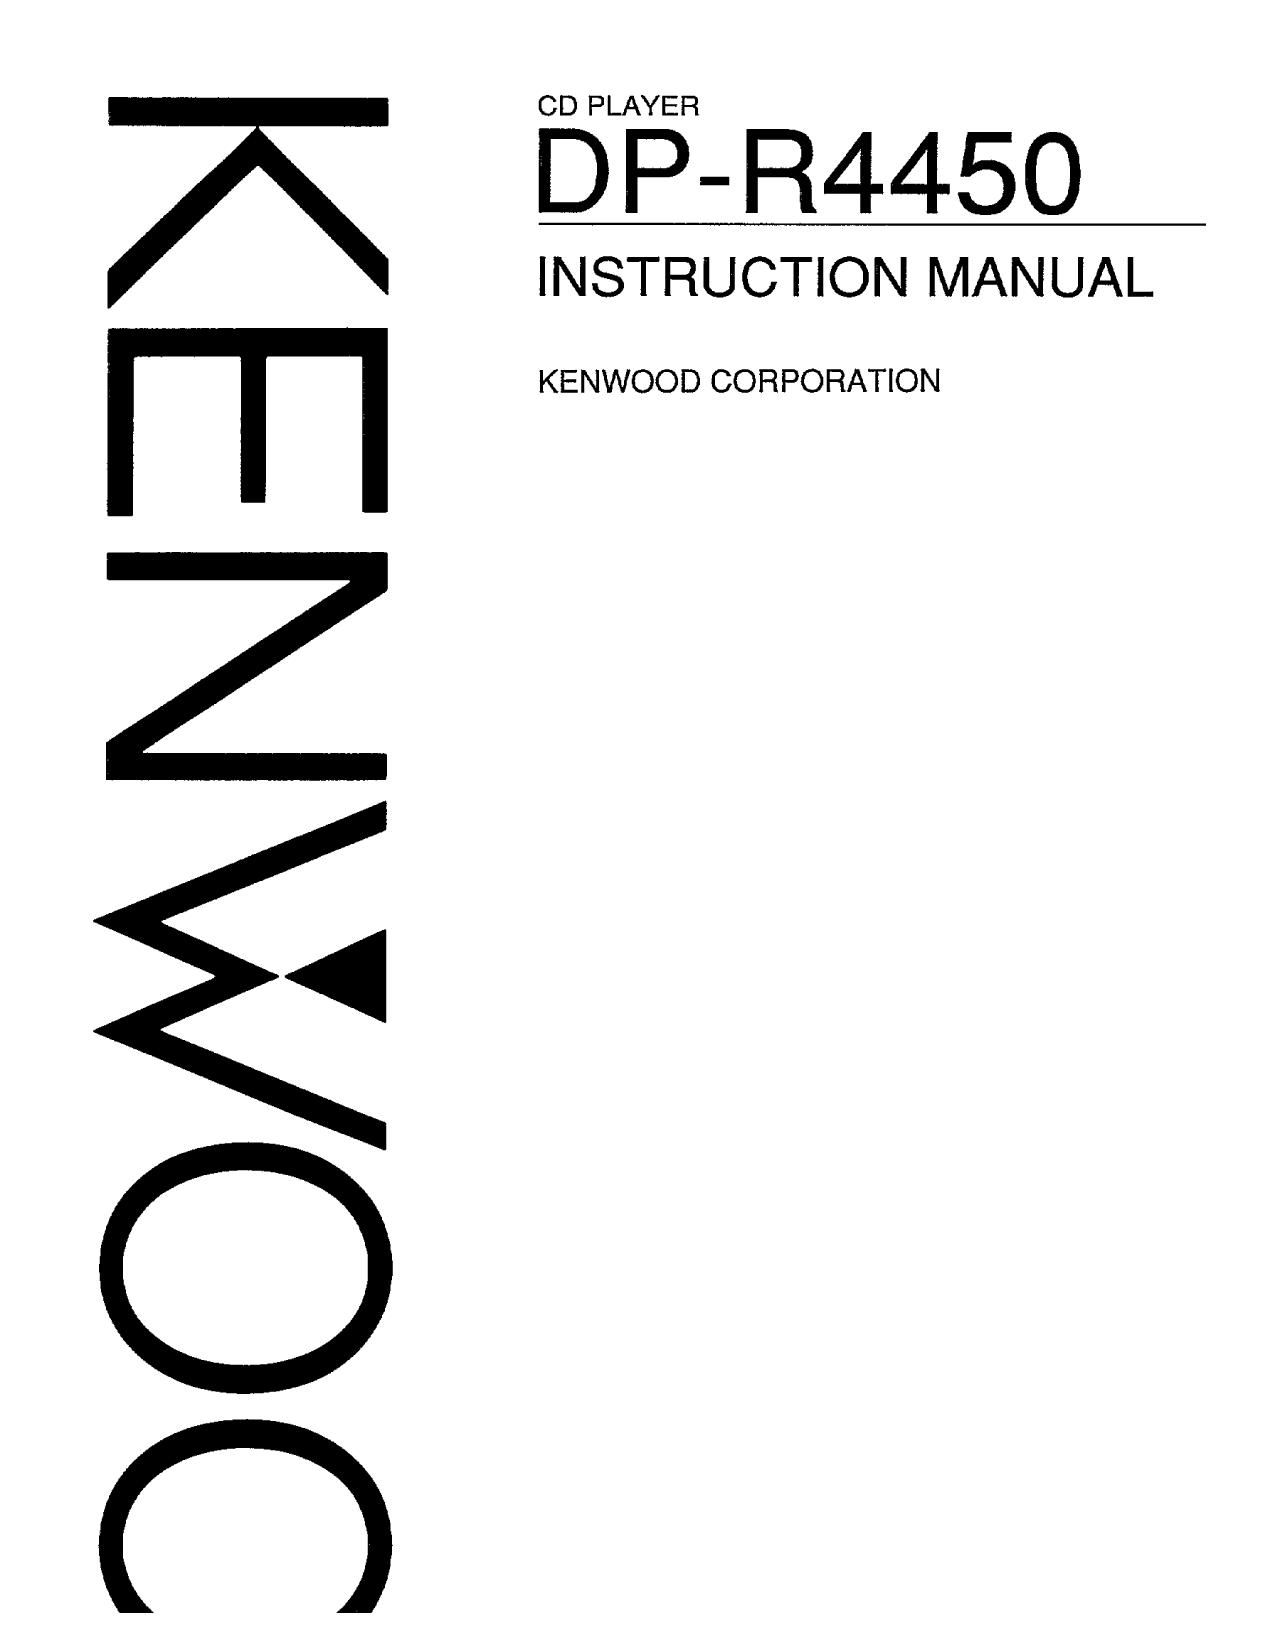 Kenwood DPR 4450 Owners Manual